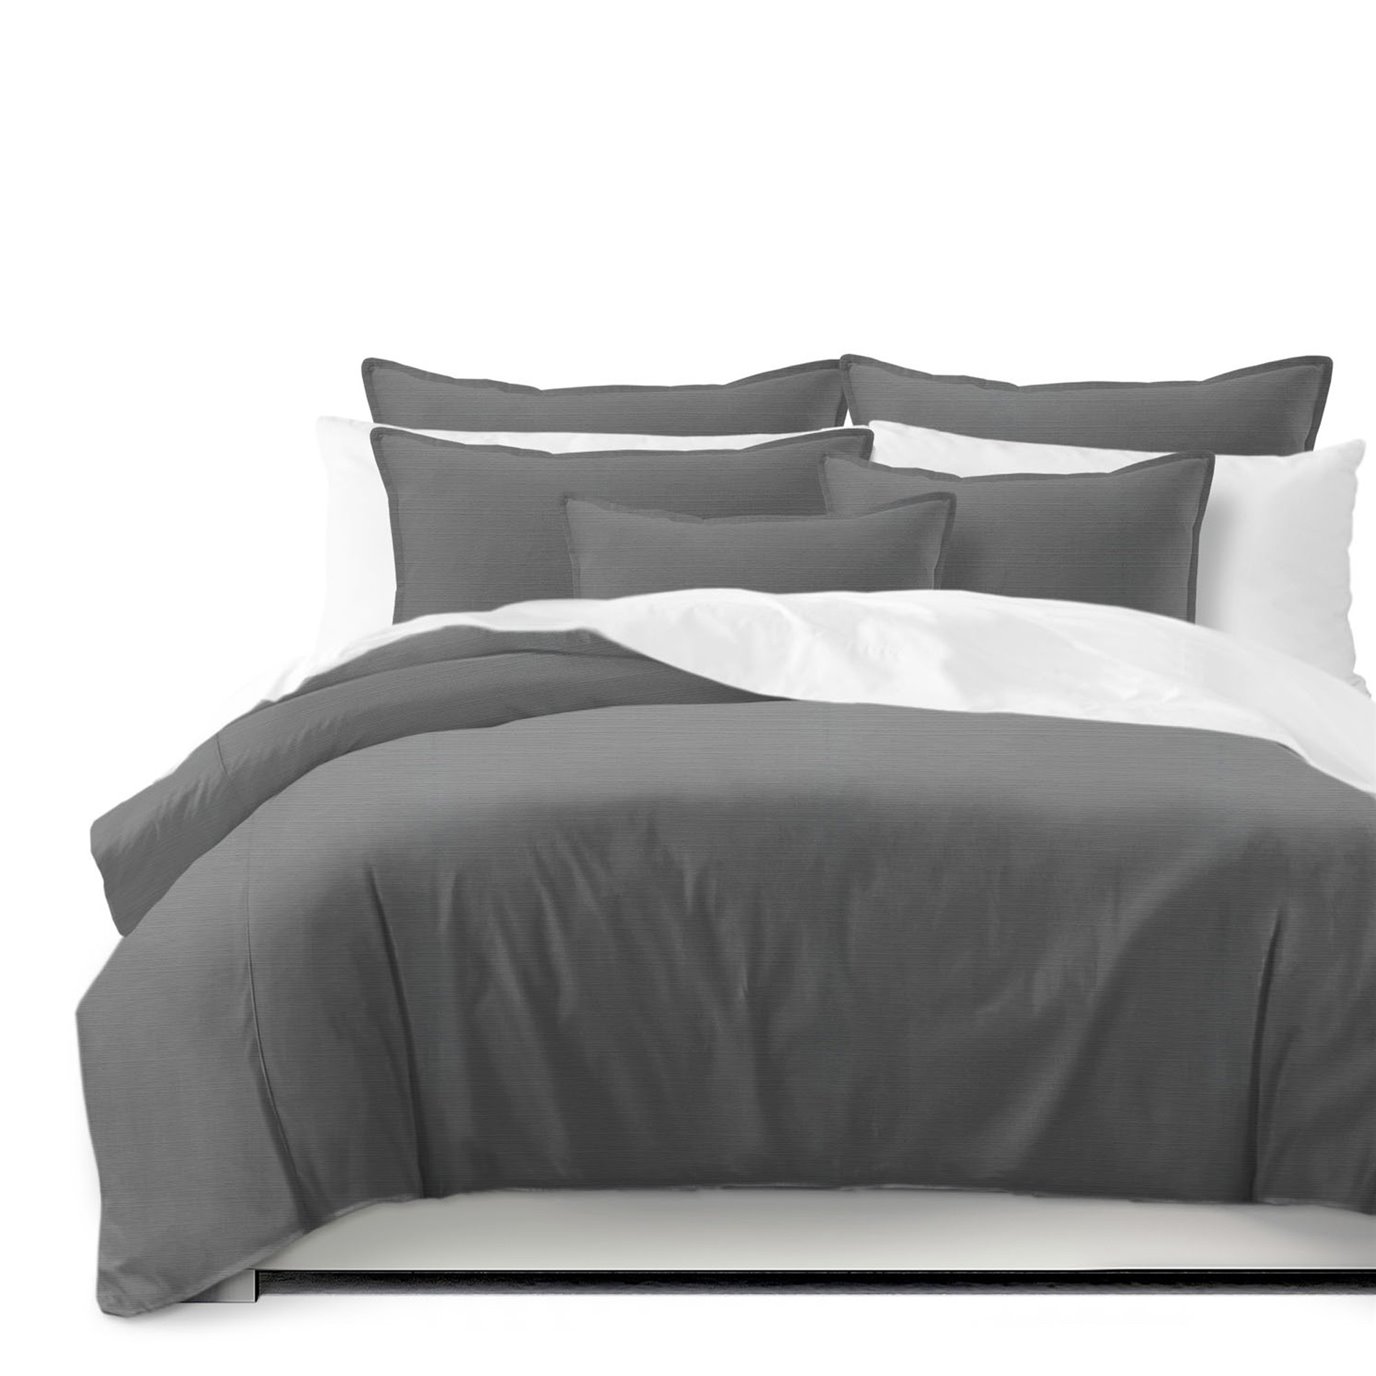 Nova Charcoal Coverlet and Pillow Sham(s) Set - Size Queen